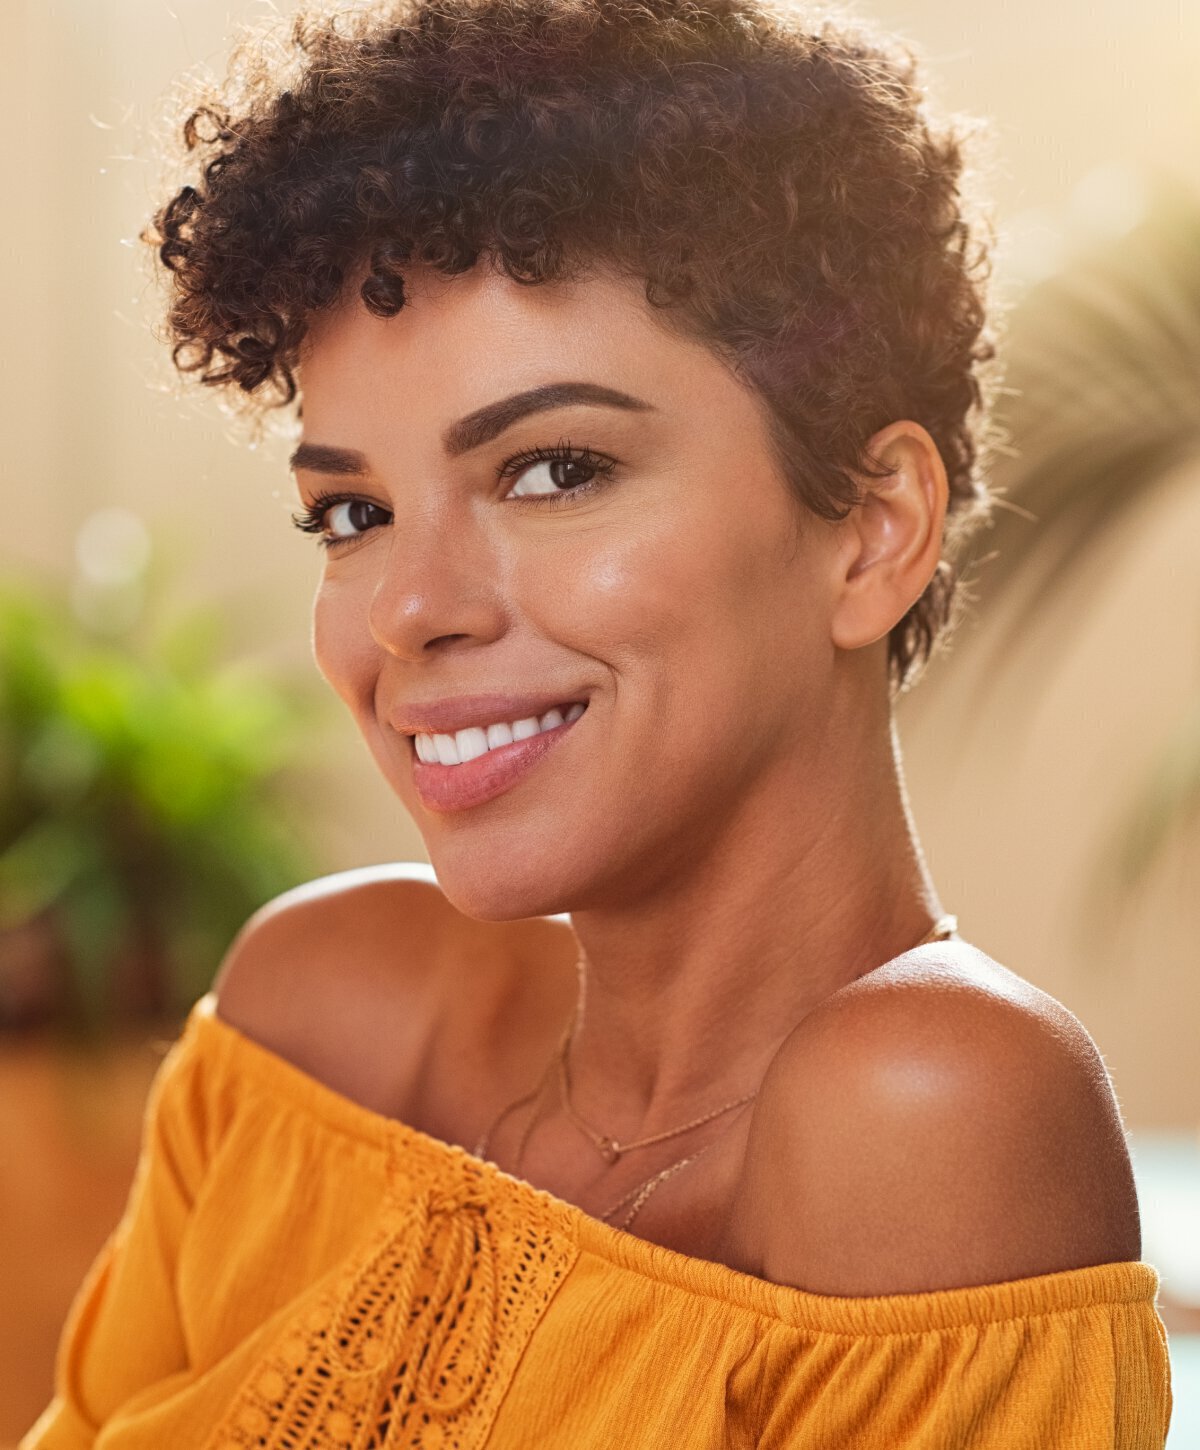 Vero Beach Renuva model with orange top smiling